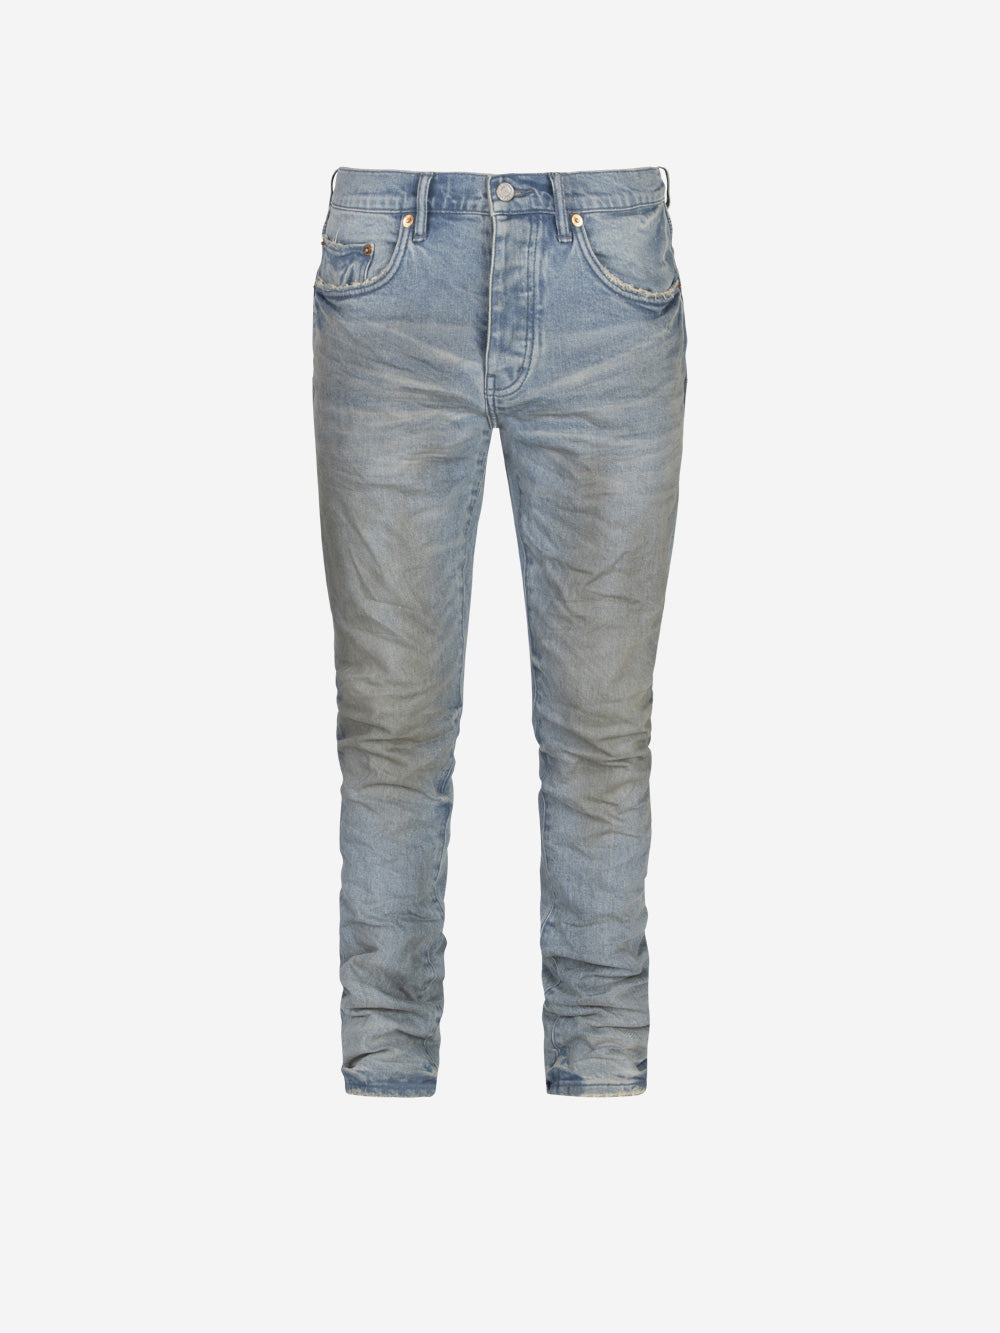 PURPLE BRAND P001 Low Rise Skinny Jeans P001